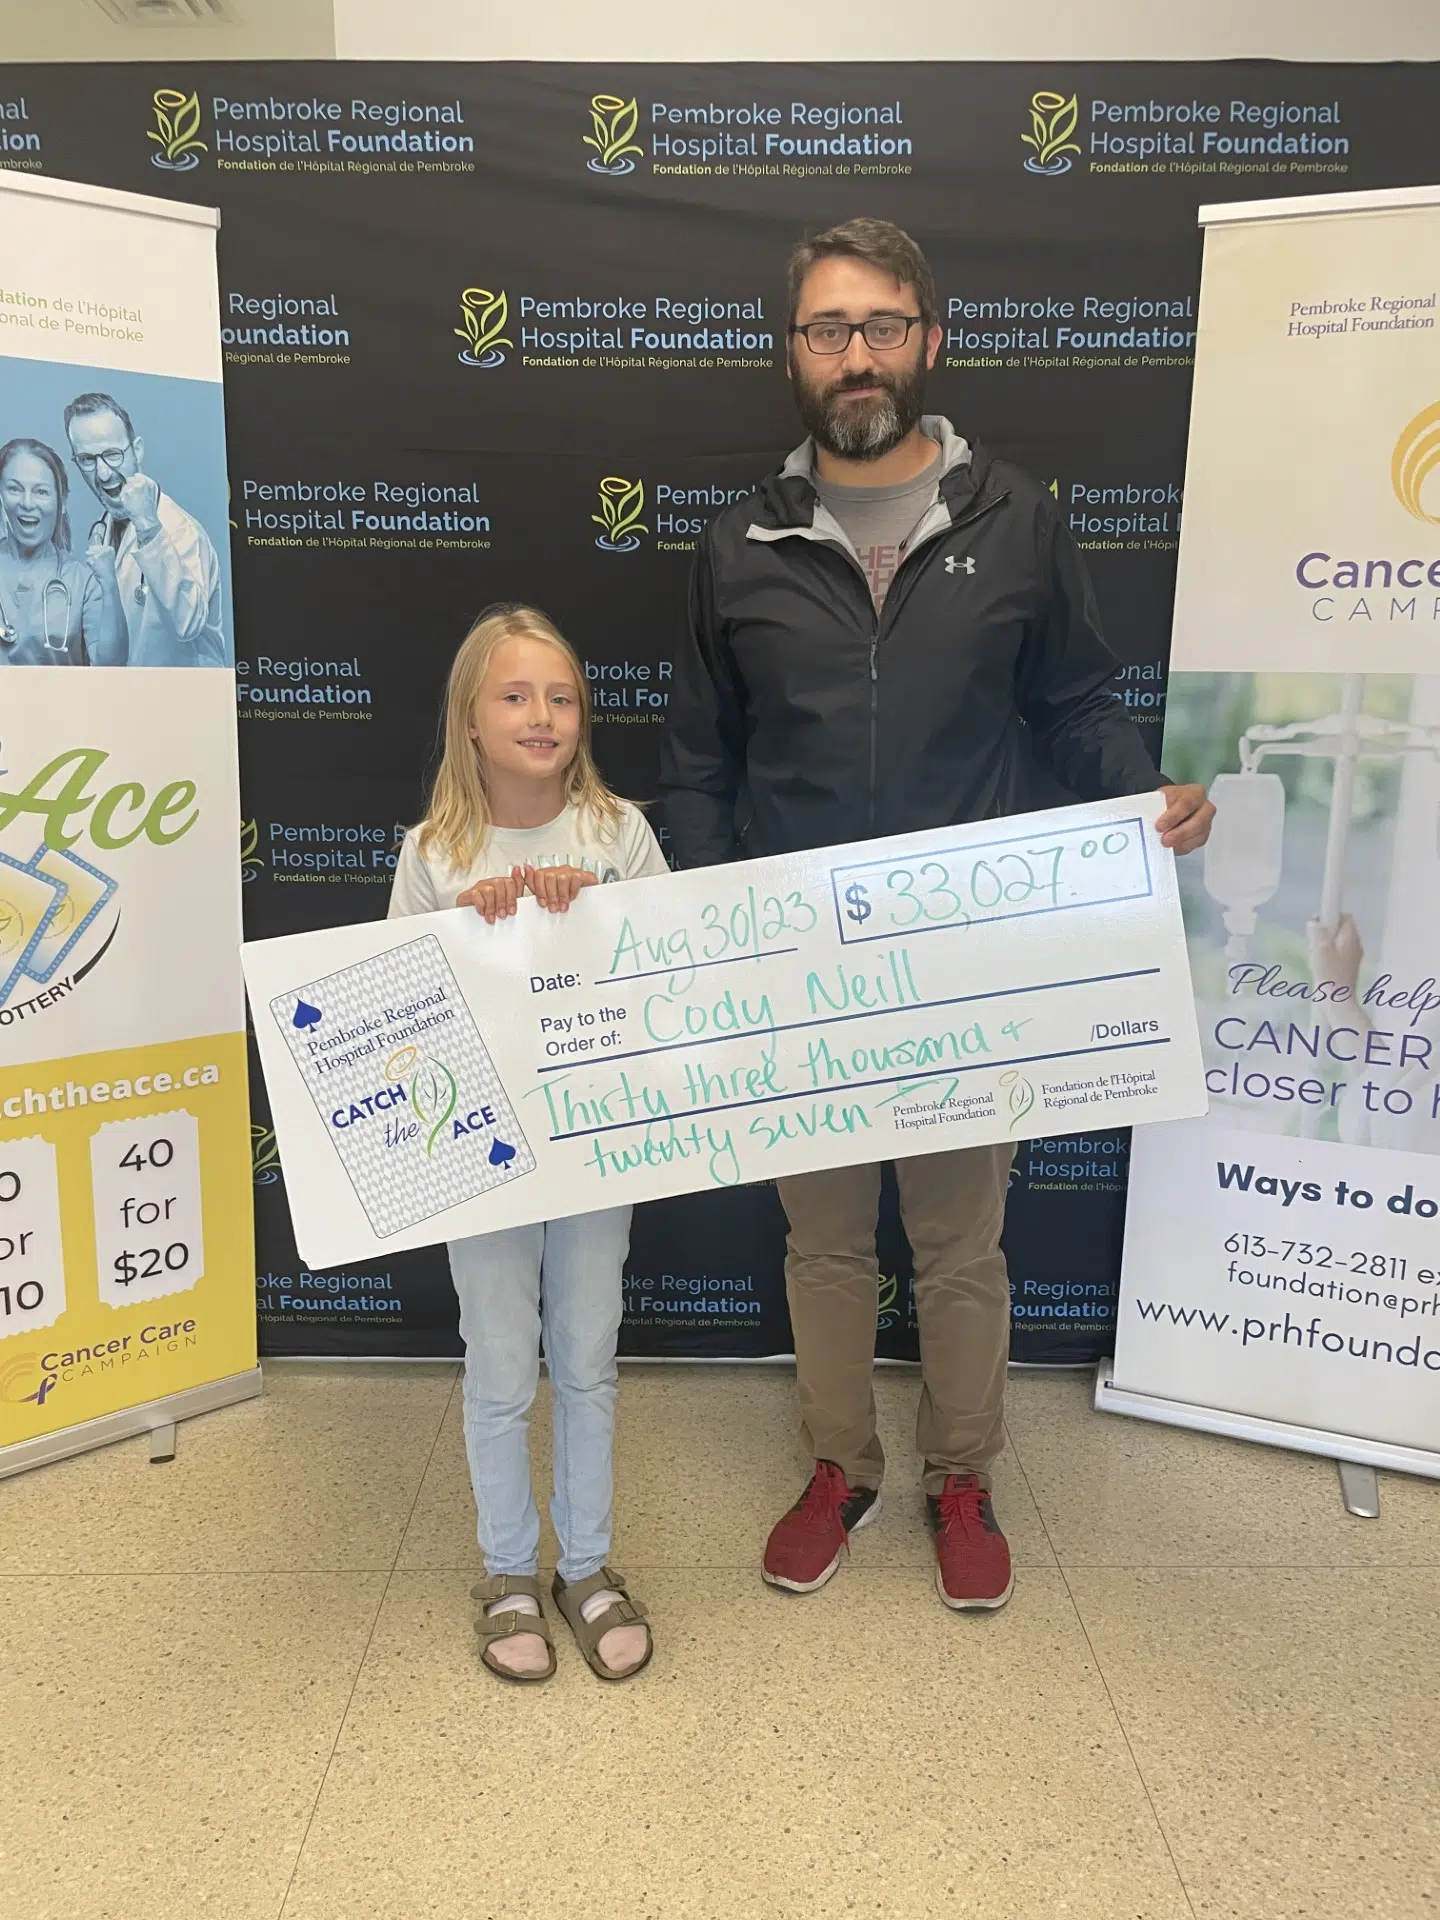 Cancer Care Campaign - Pembroke Regional Hospital Foundation